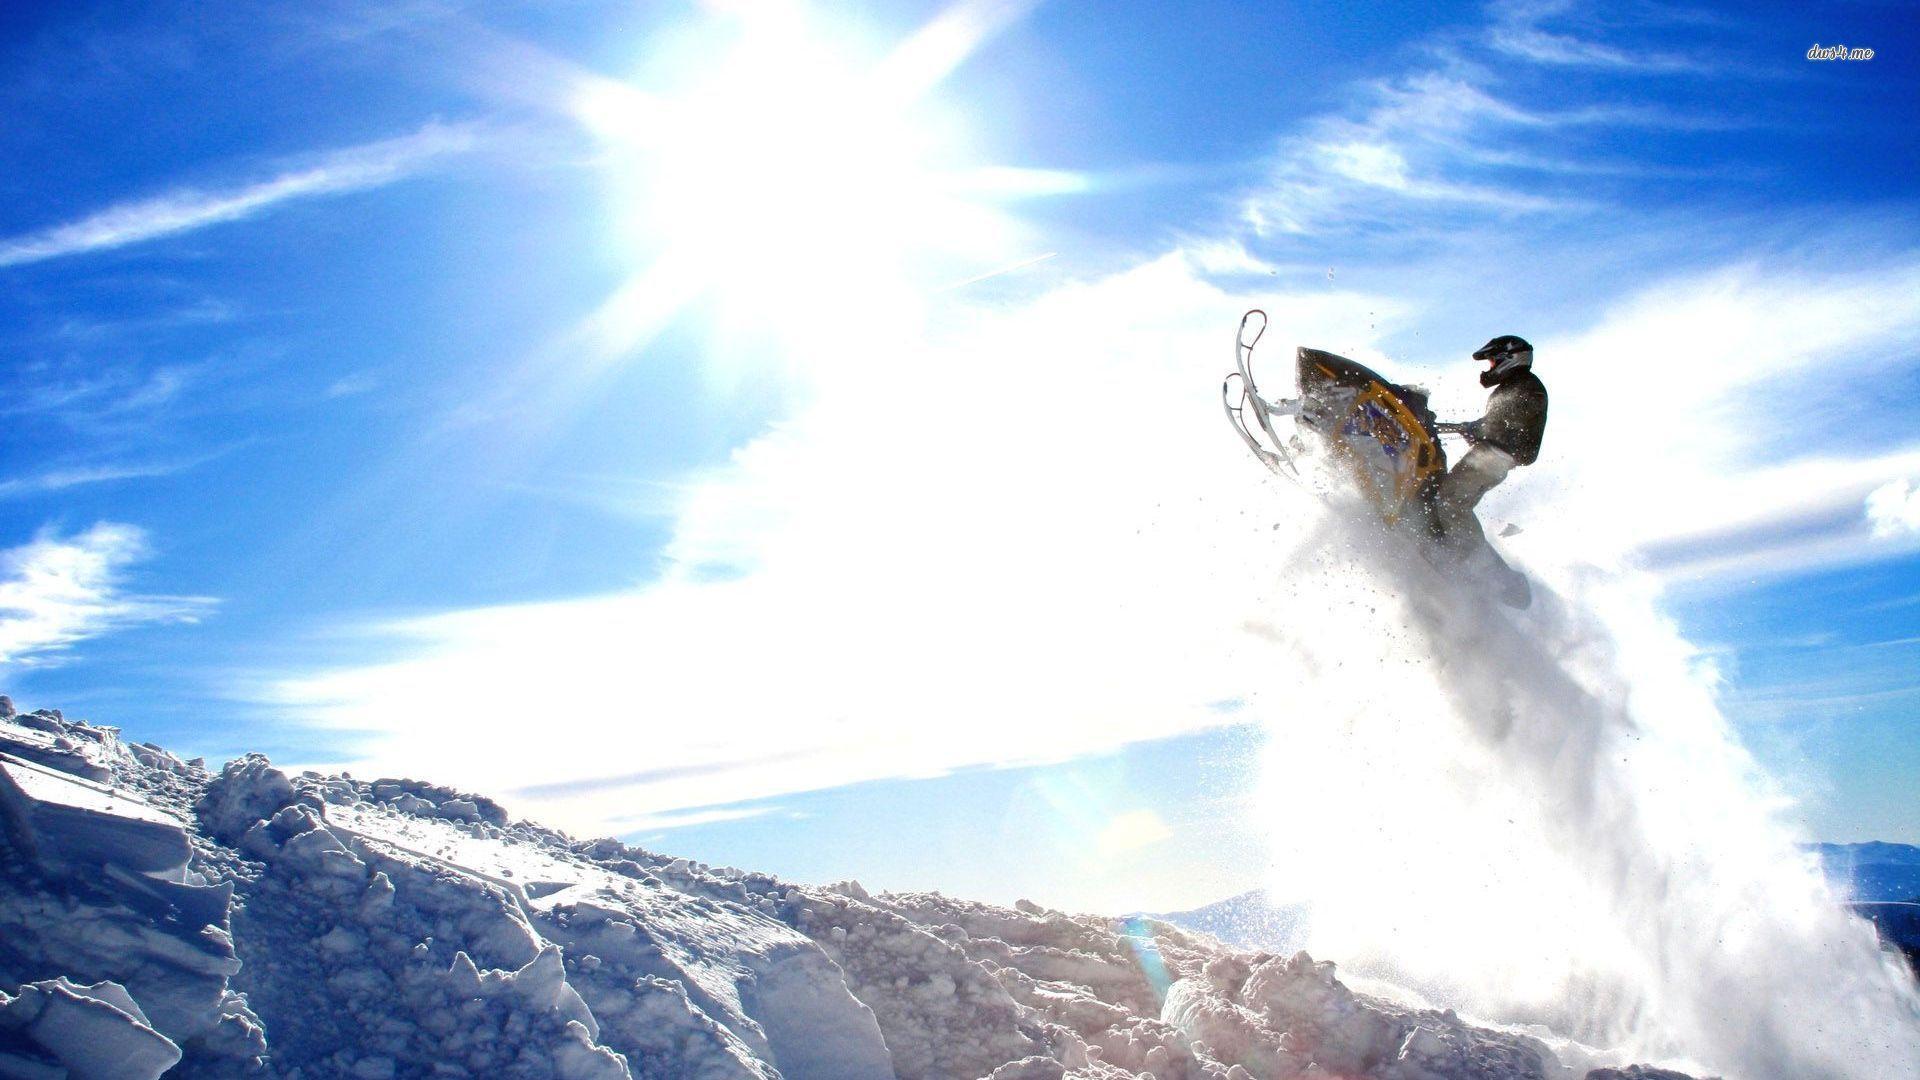 SKIDOO snowmobile sled ski doo winter snow extreme wallpaper  1920x1200   648412  WallpaperUP